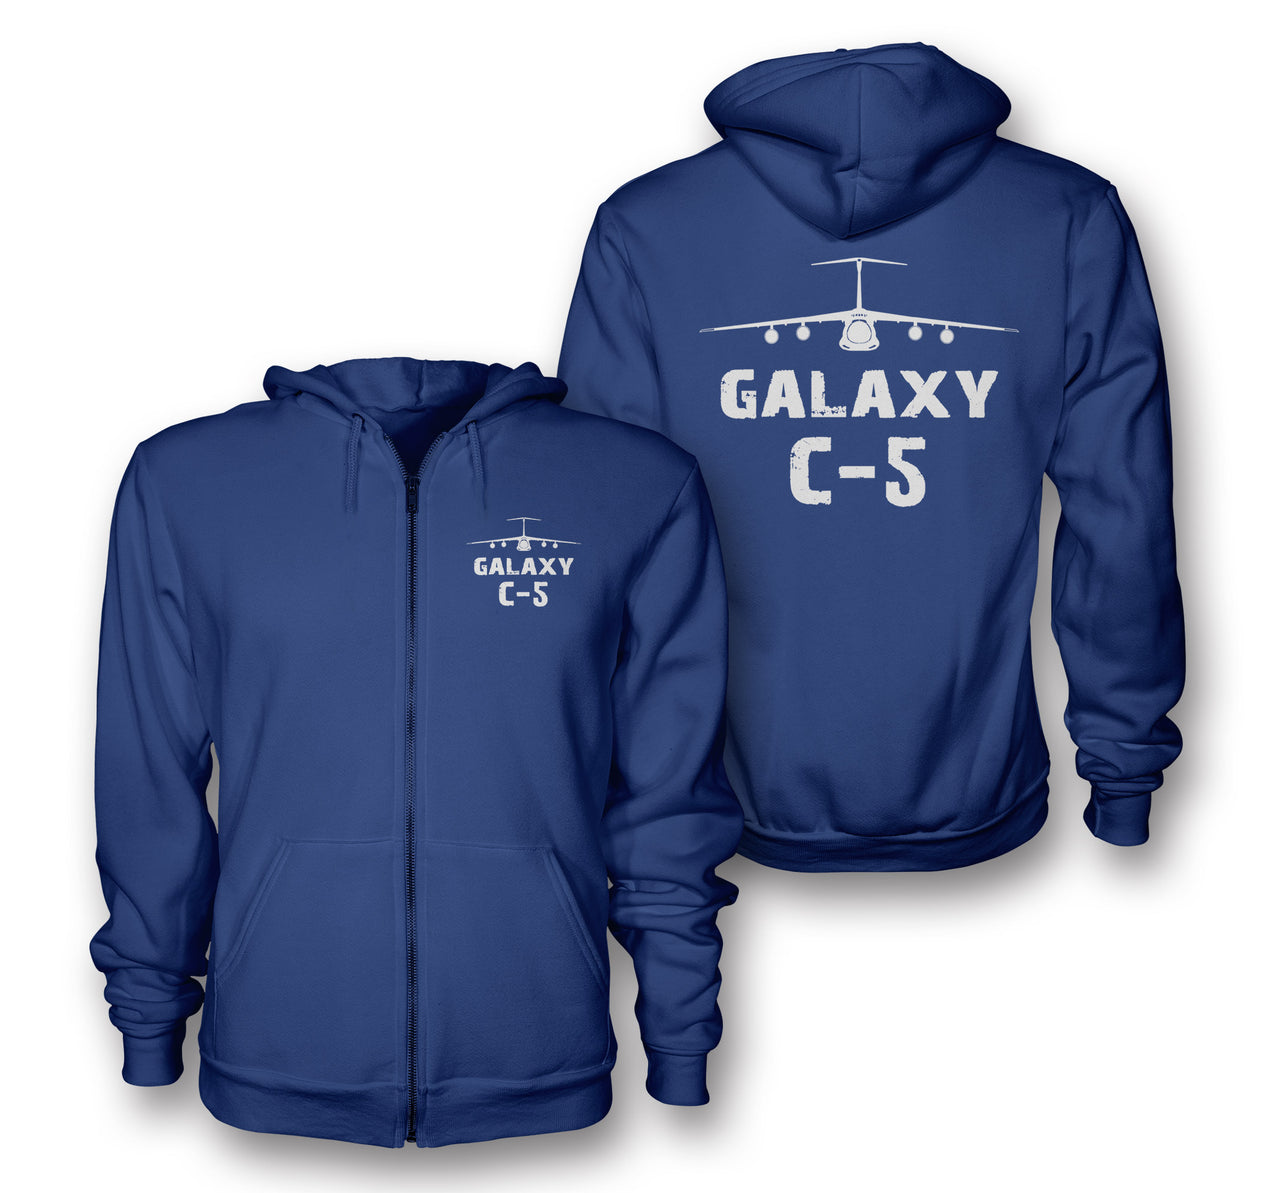 Galaxy C-5 & Plane Designed Zipped Hoodies